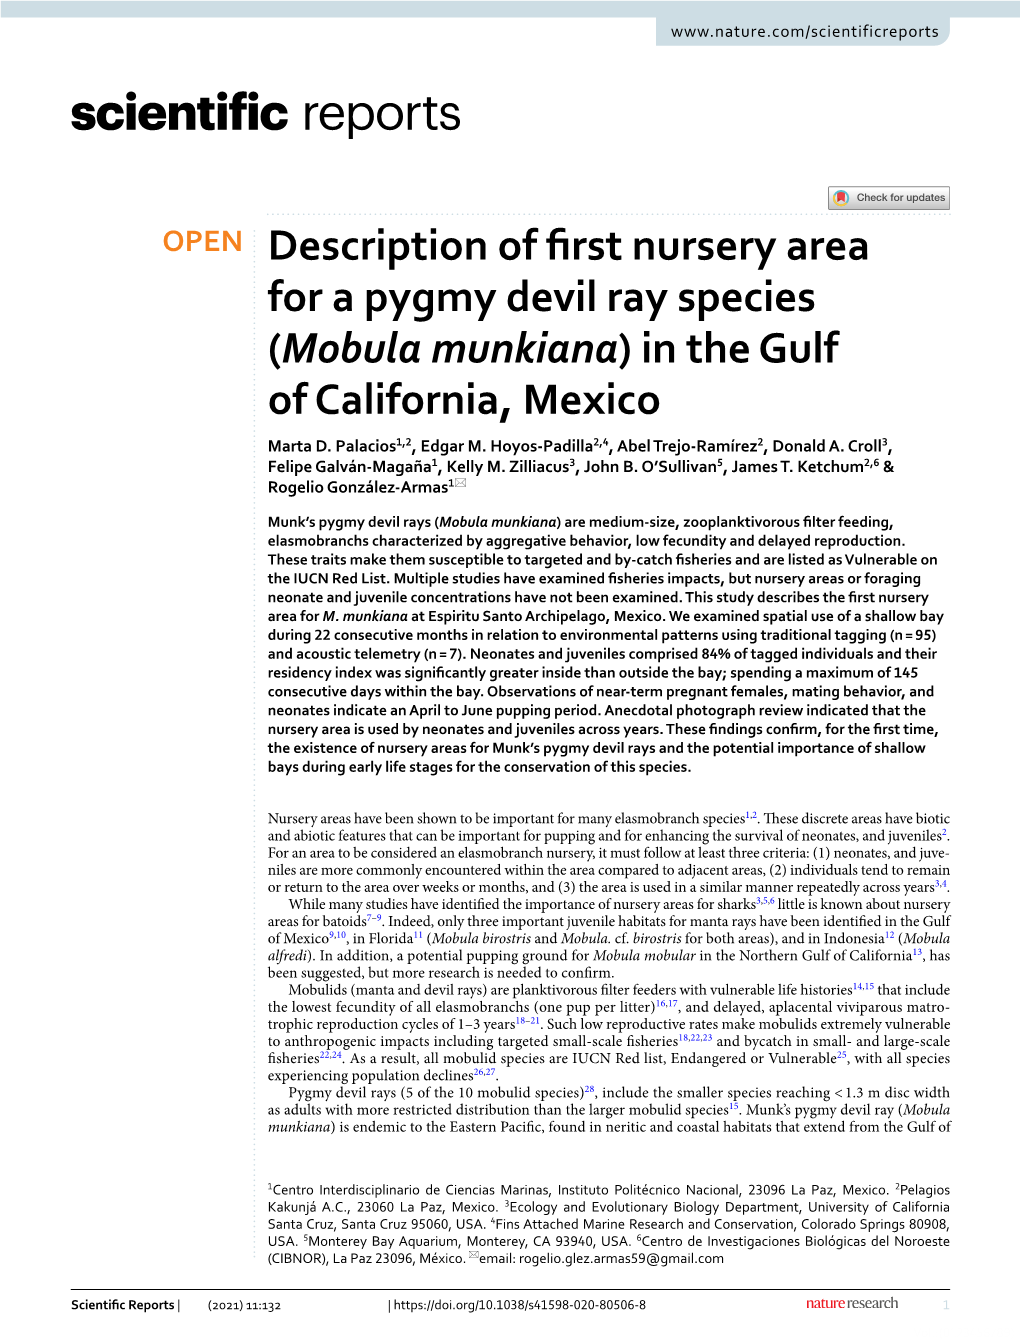 Mobula Munkiana) in the Gulf of California, Mexico Marta D